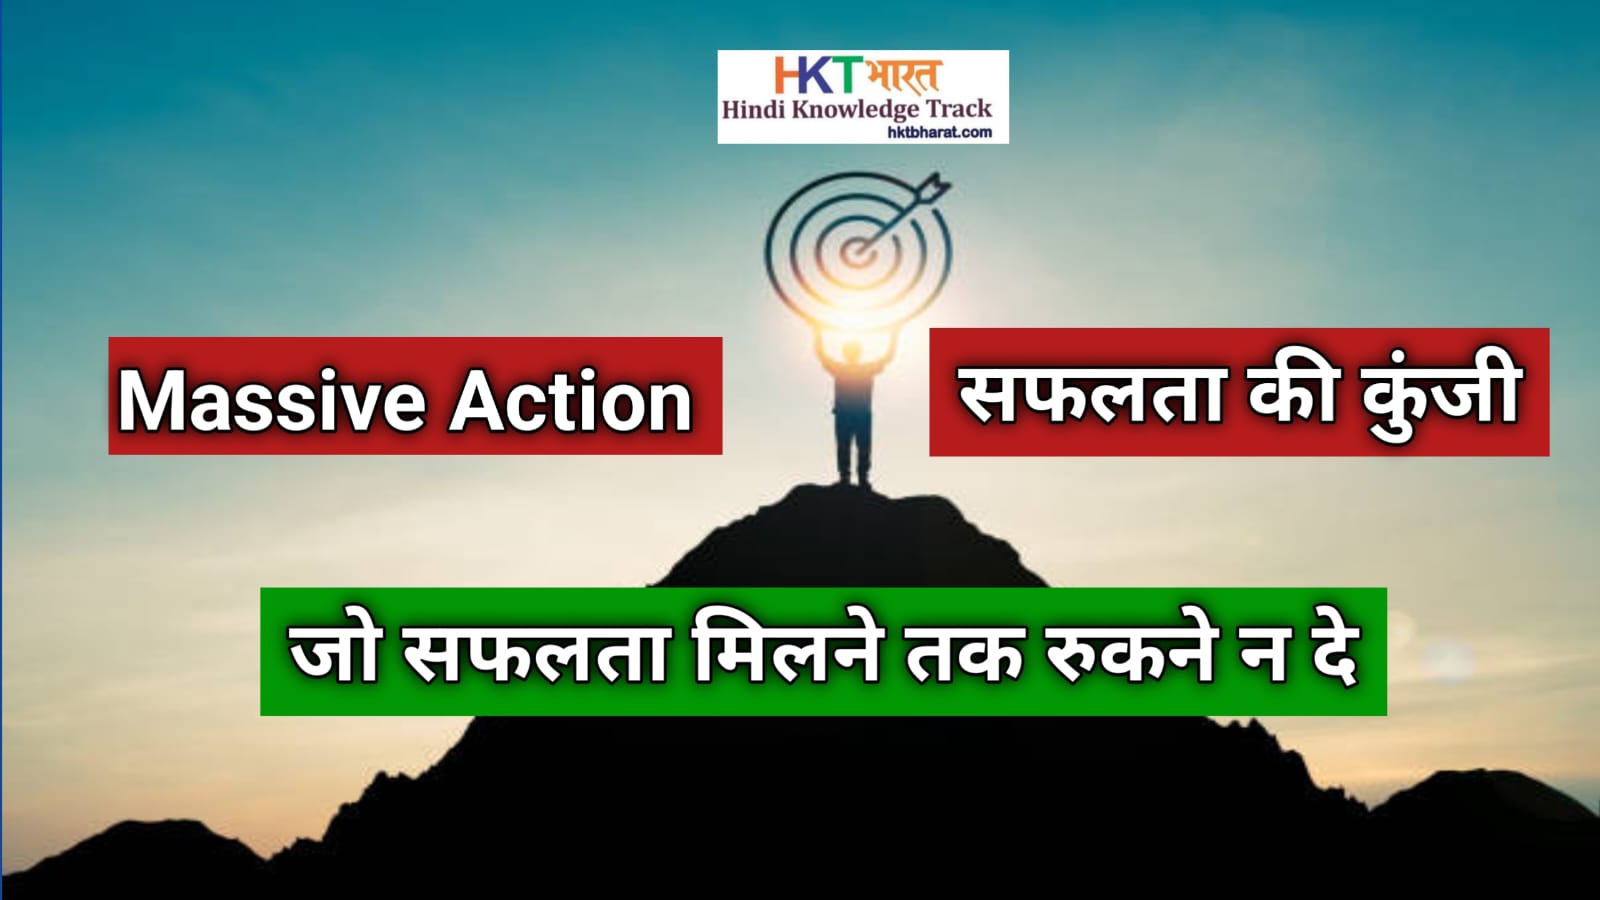 Massive Action - सफलता की चाबी | Massive Action Key to Success | Massive Action in hindi